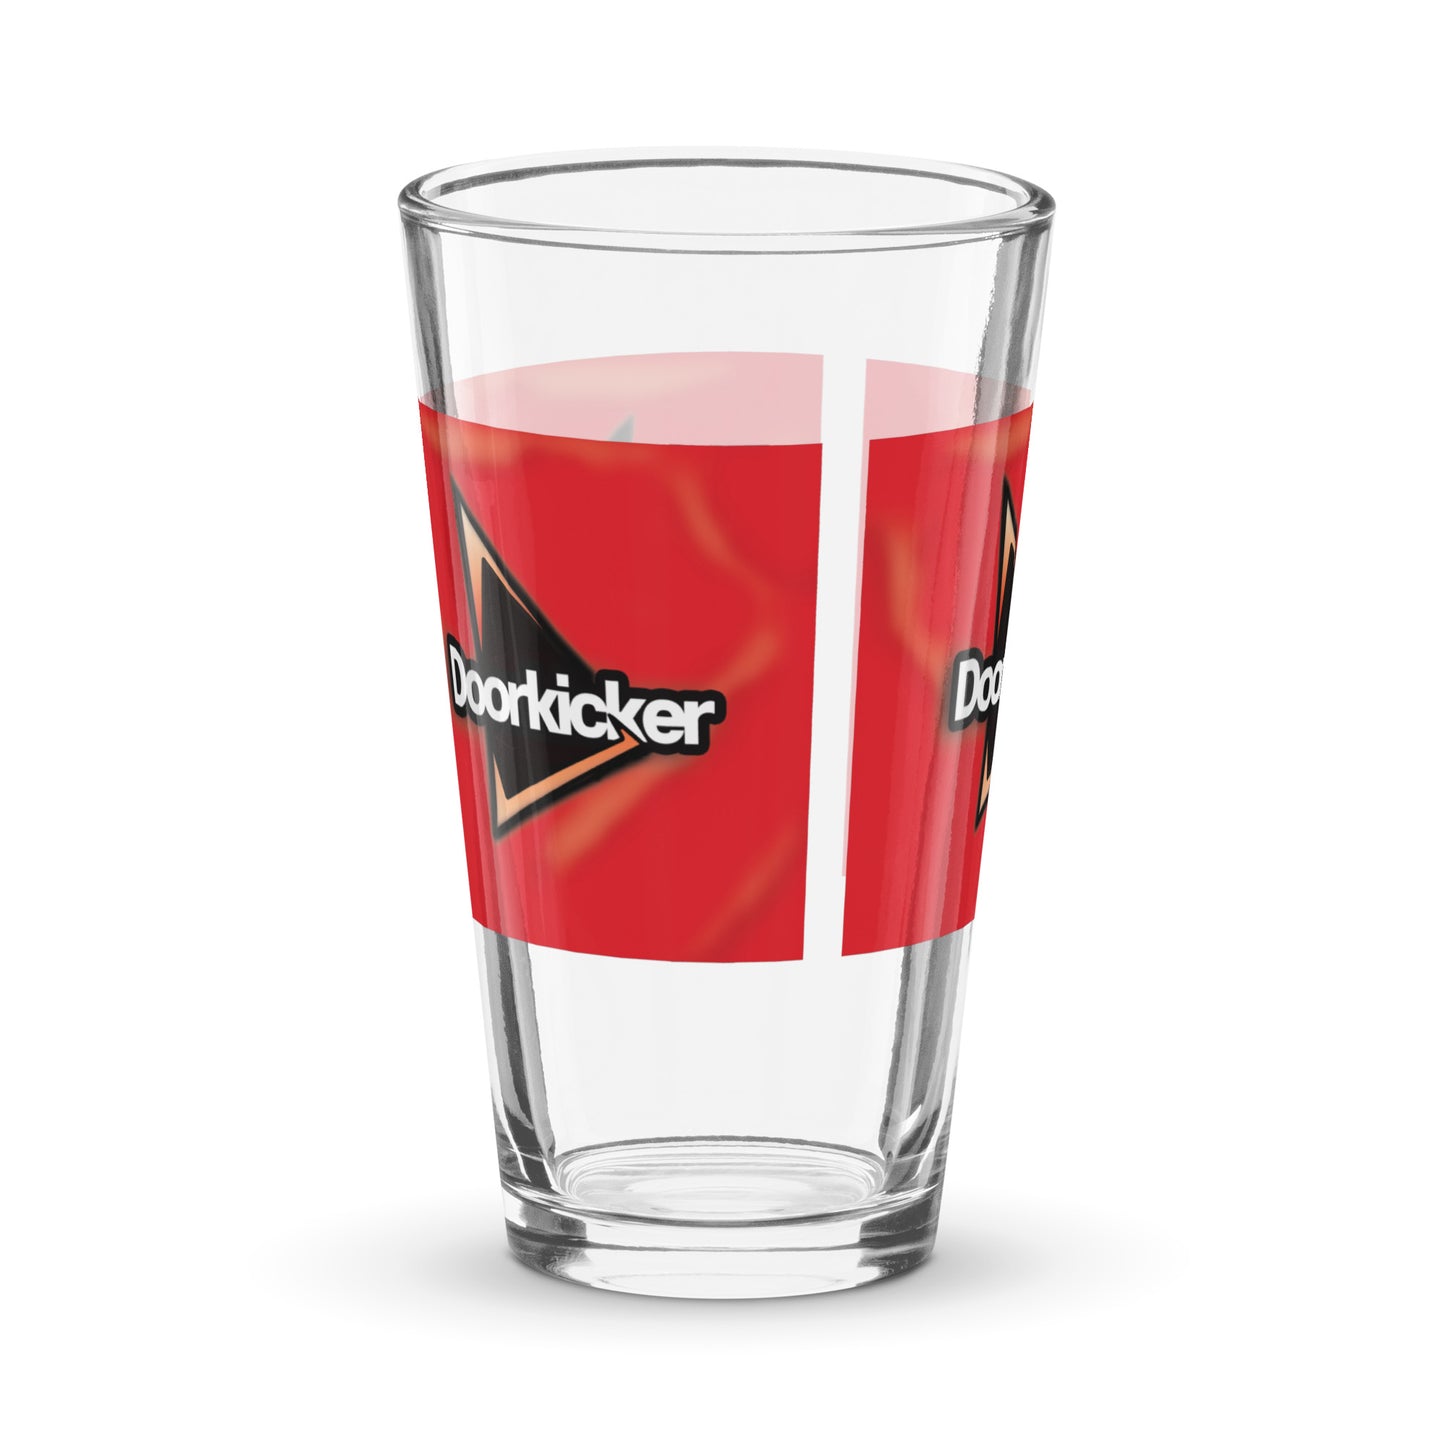 Doorkicker Shaker pint glass